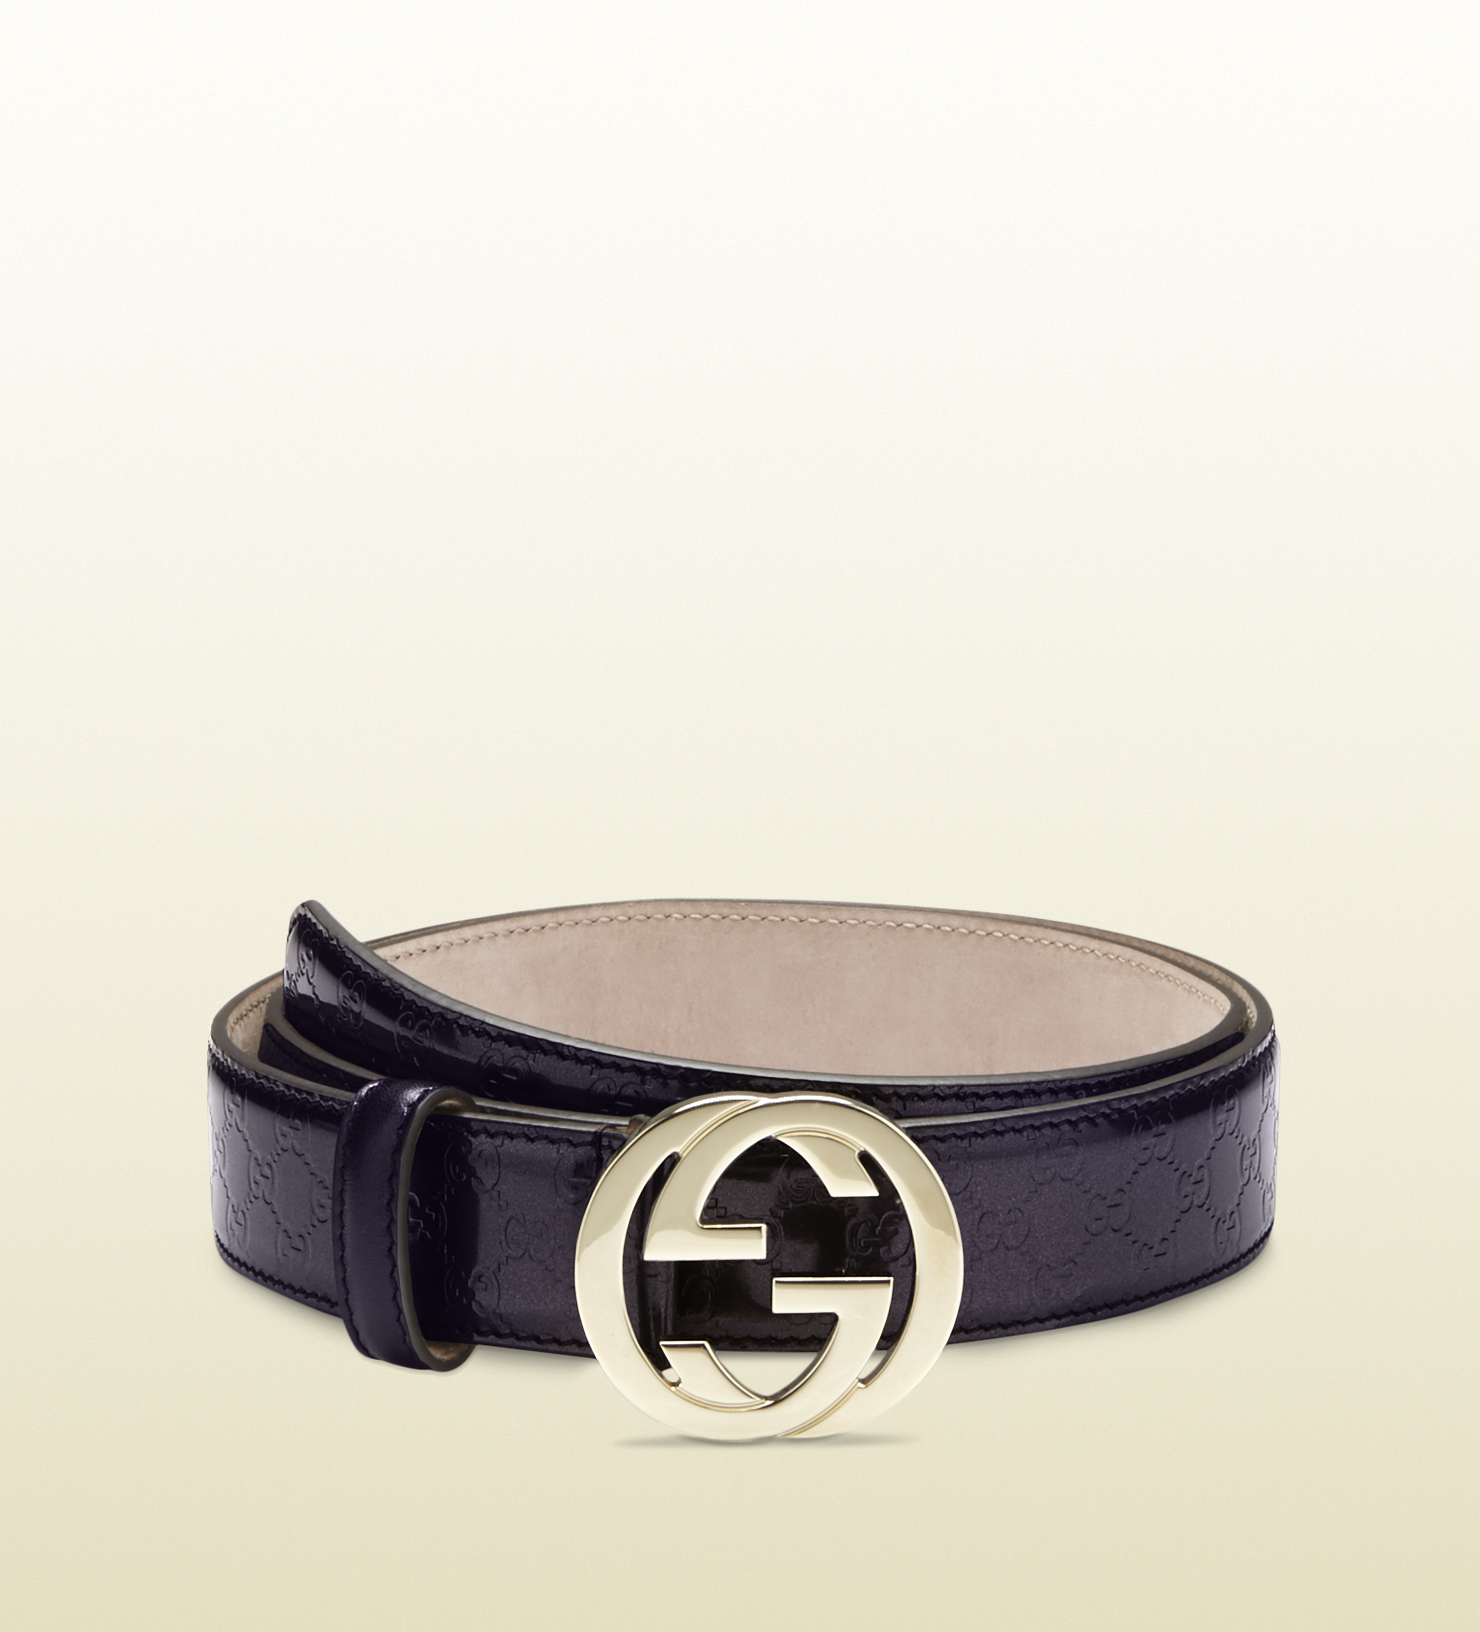 Lyst - Gucci Guccissima Belt with Interlocking G Buckle in Black